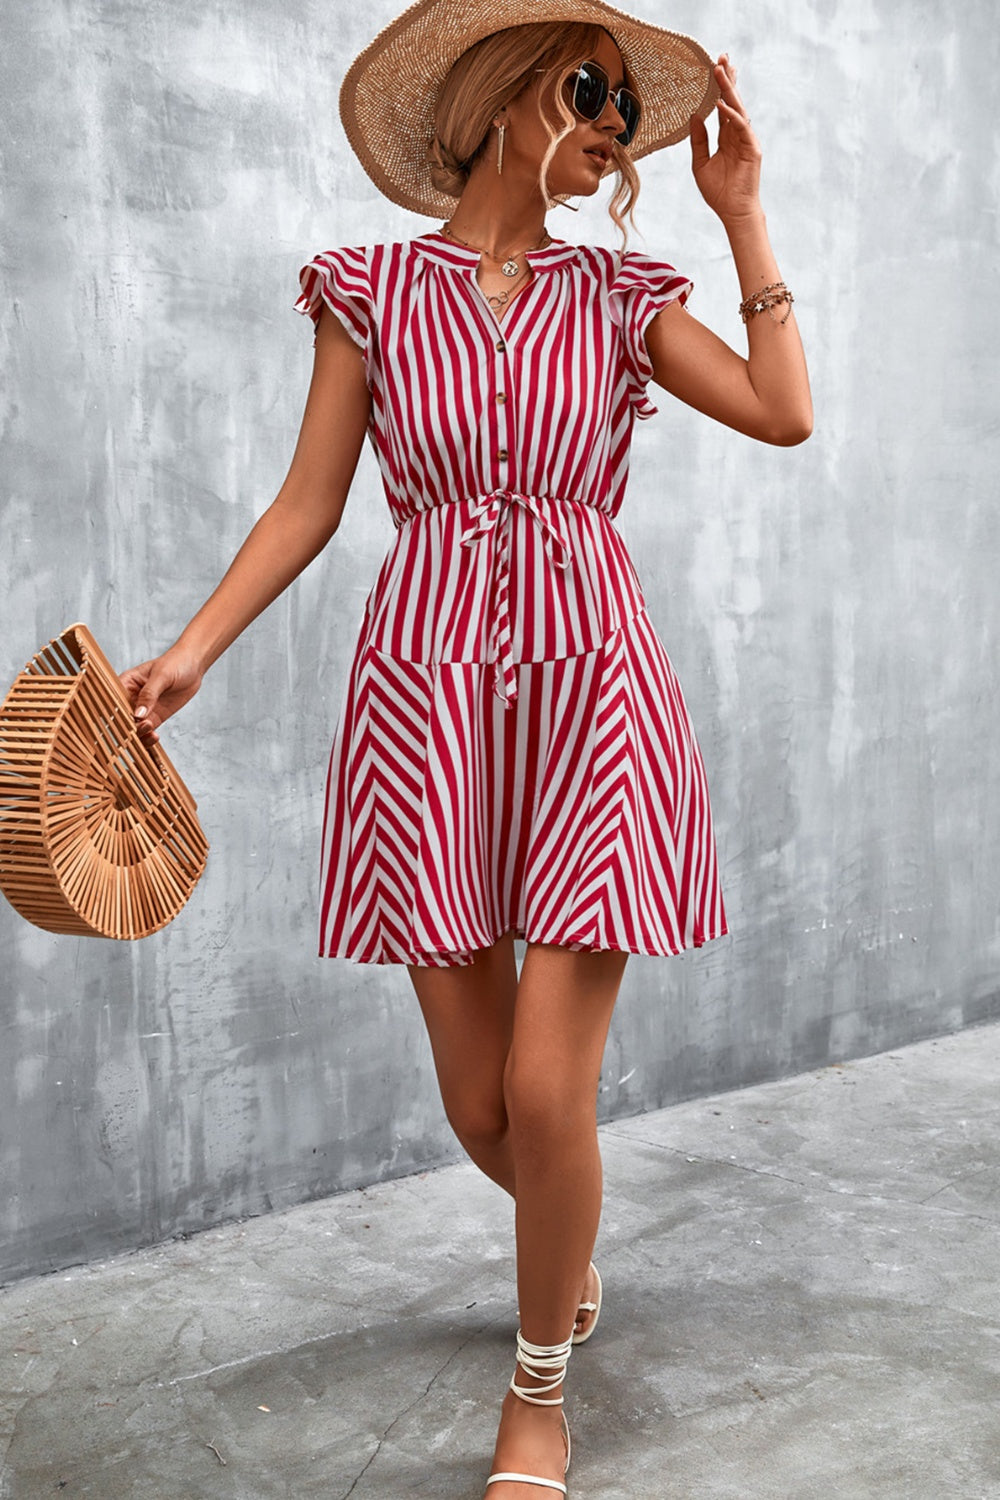 TEEK - Deep Red Ruffled Striped Cap Sleeve Dress DRESS TEEK Trend S  